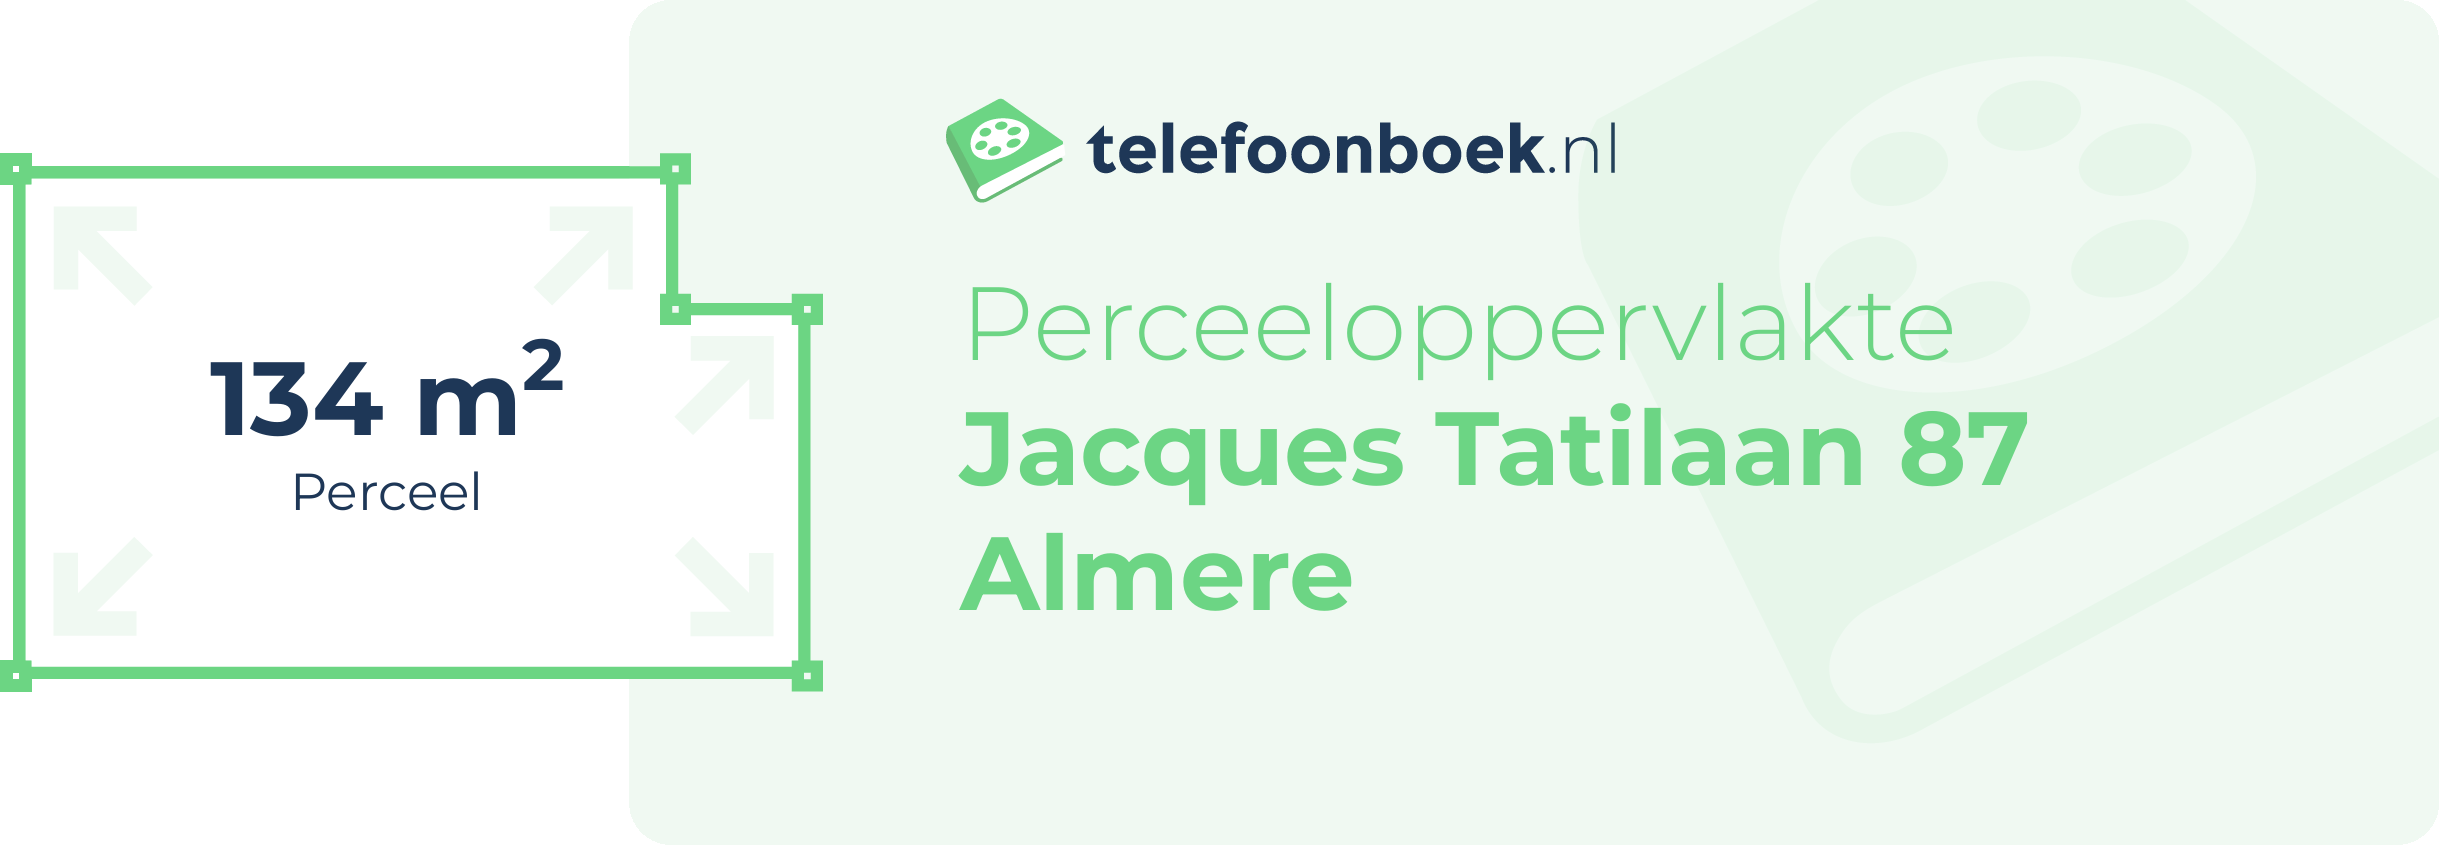 Perceeloppervlakte Jacques Tatilaan 87 Almere